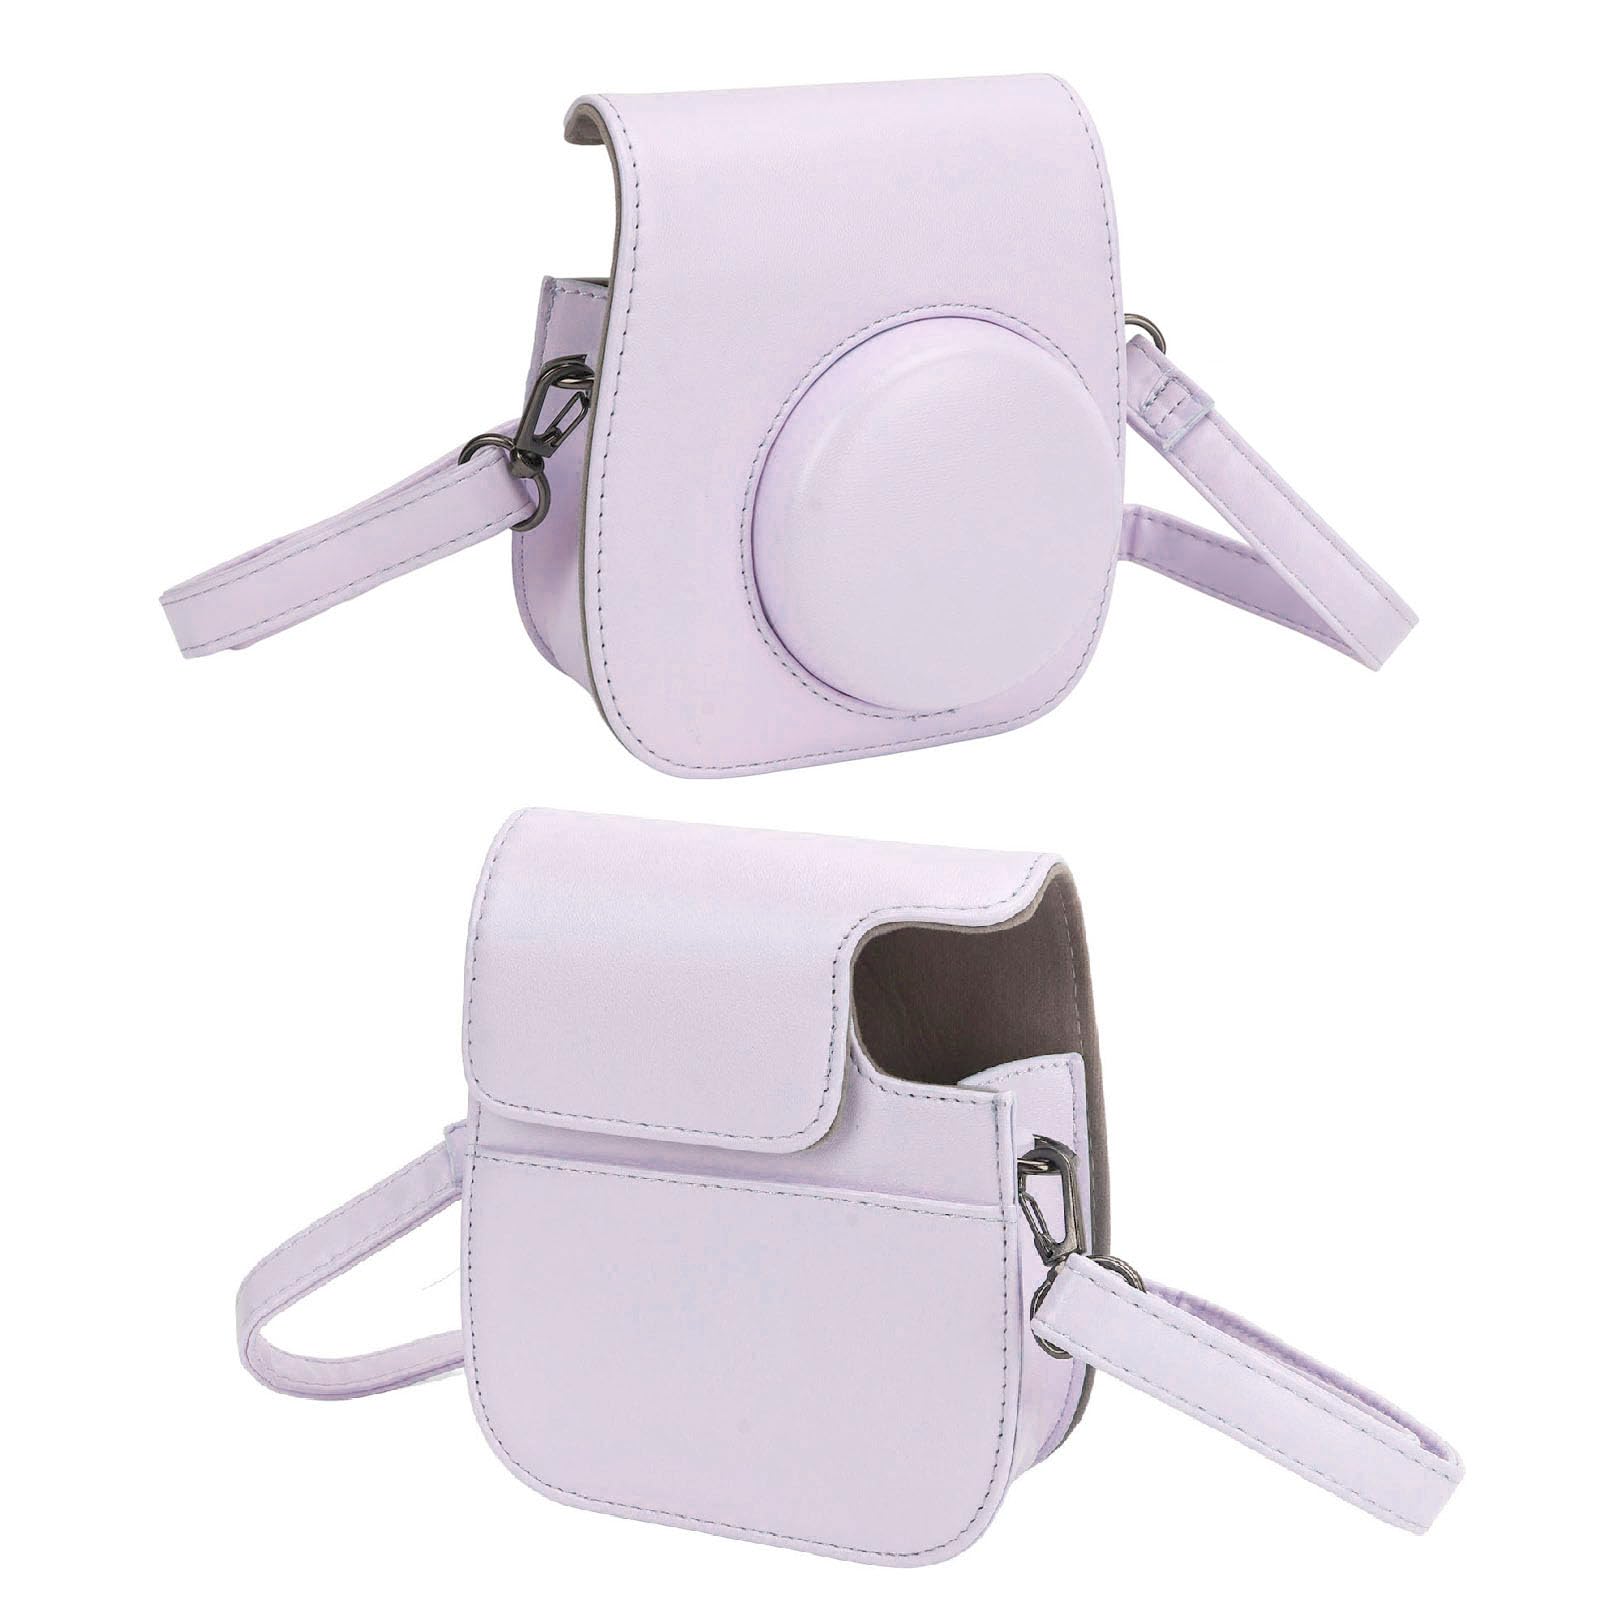 DAUZ Camera Case, SkinFriendly AntiScratch Adjustable Camera Bag with Stickers for Mini 12 (Purple)